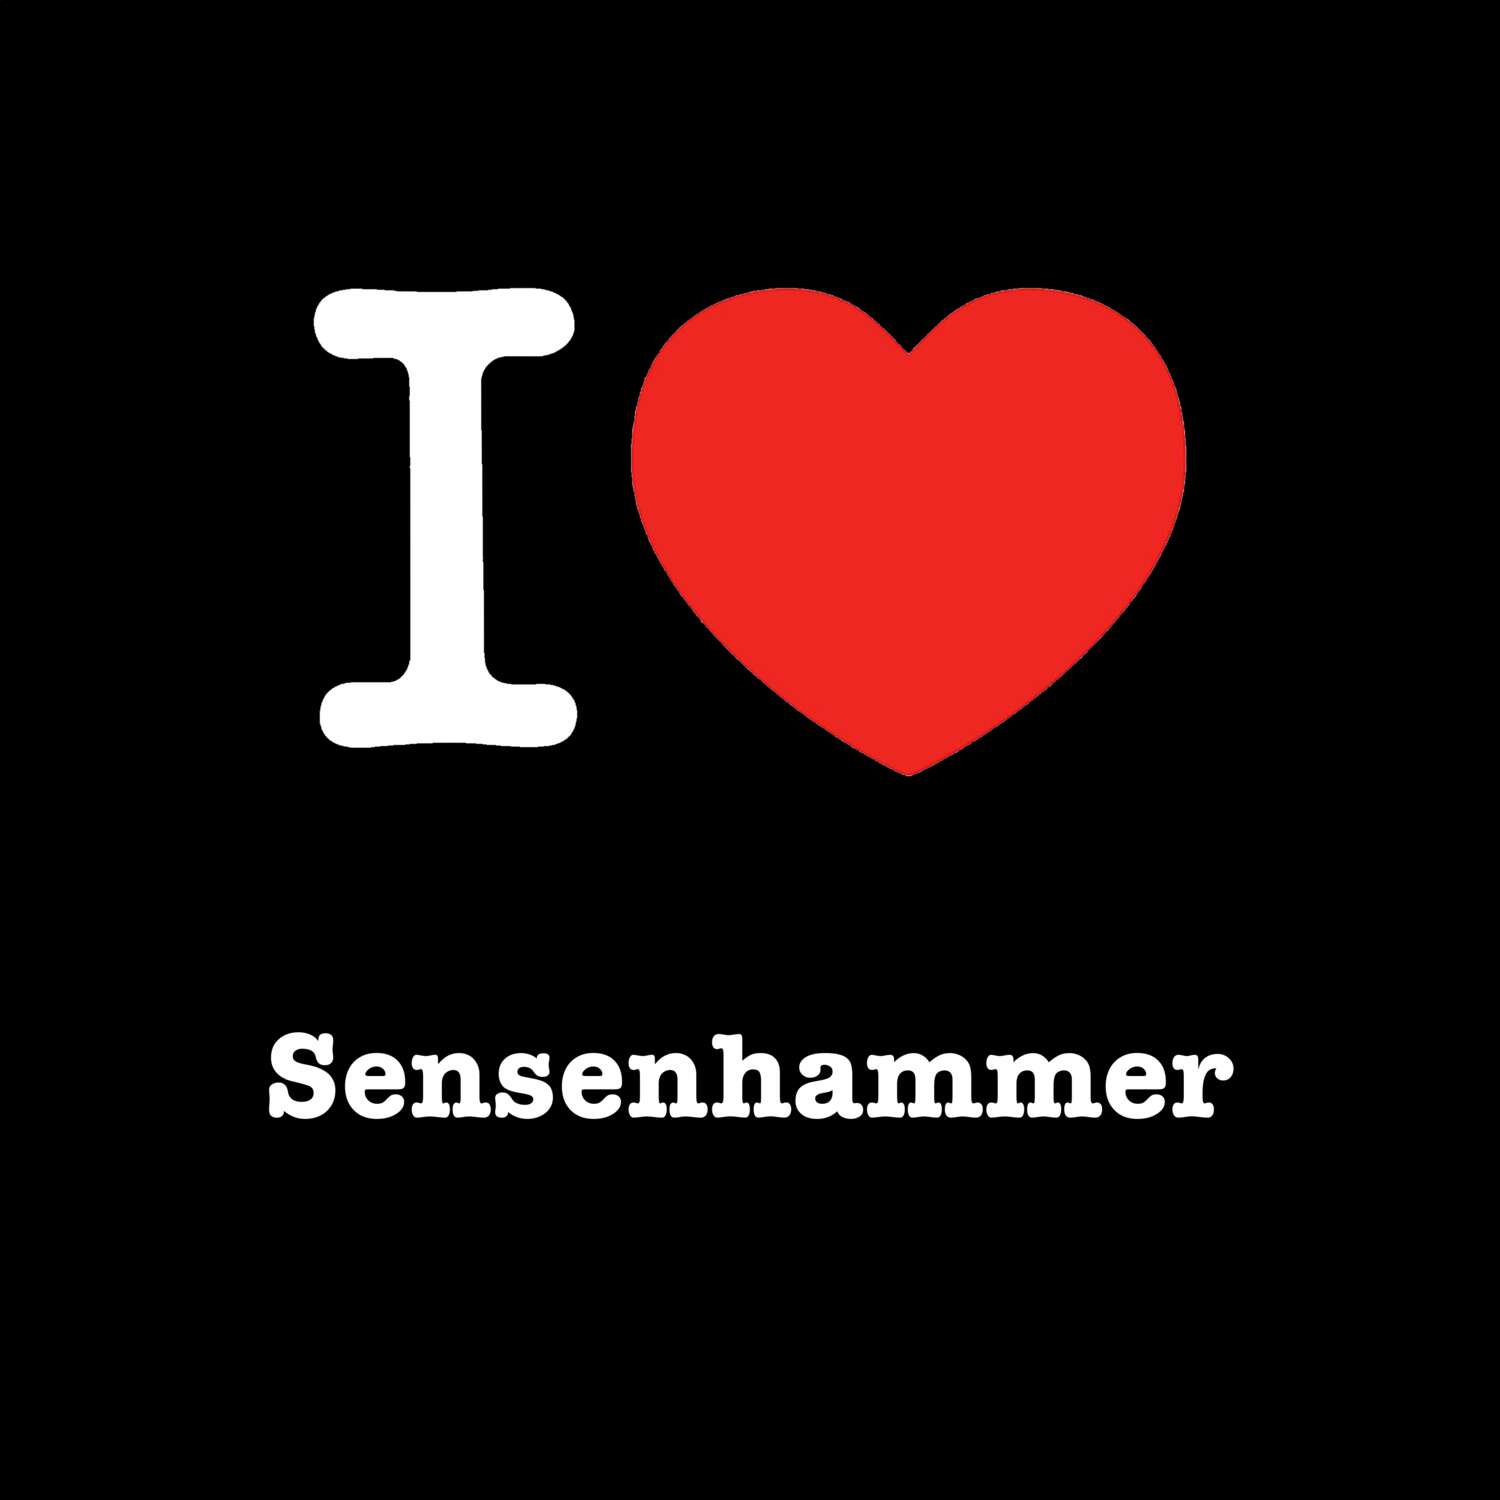 Sensenhammer T-Shirt »I love«